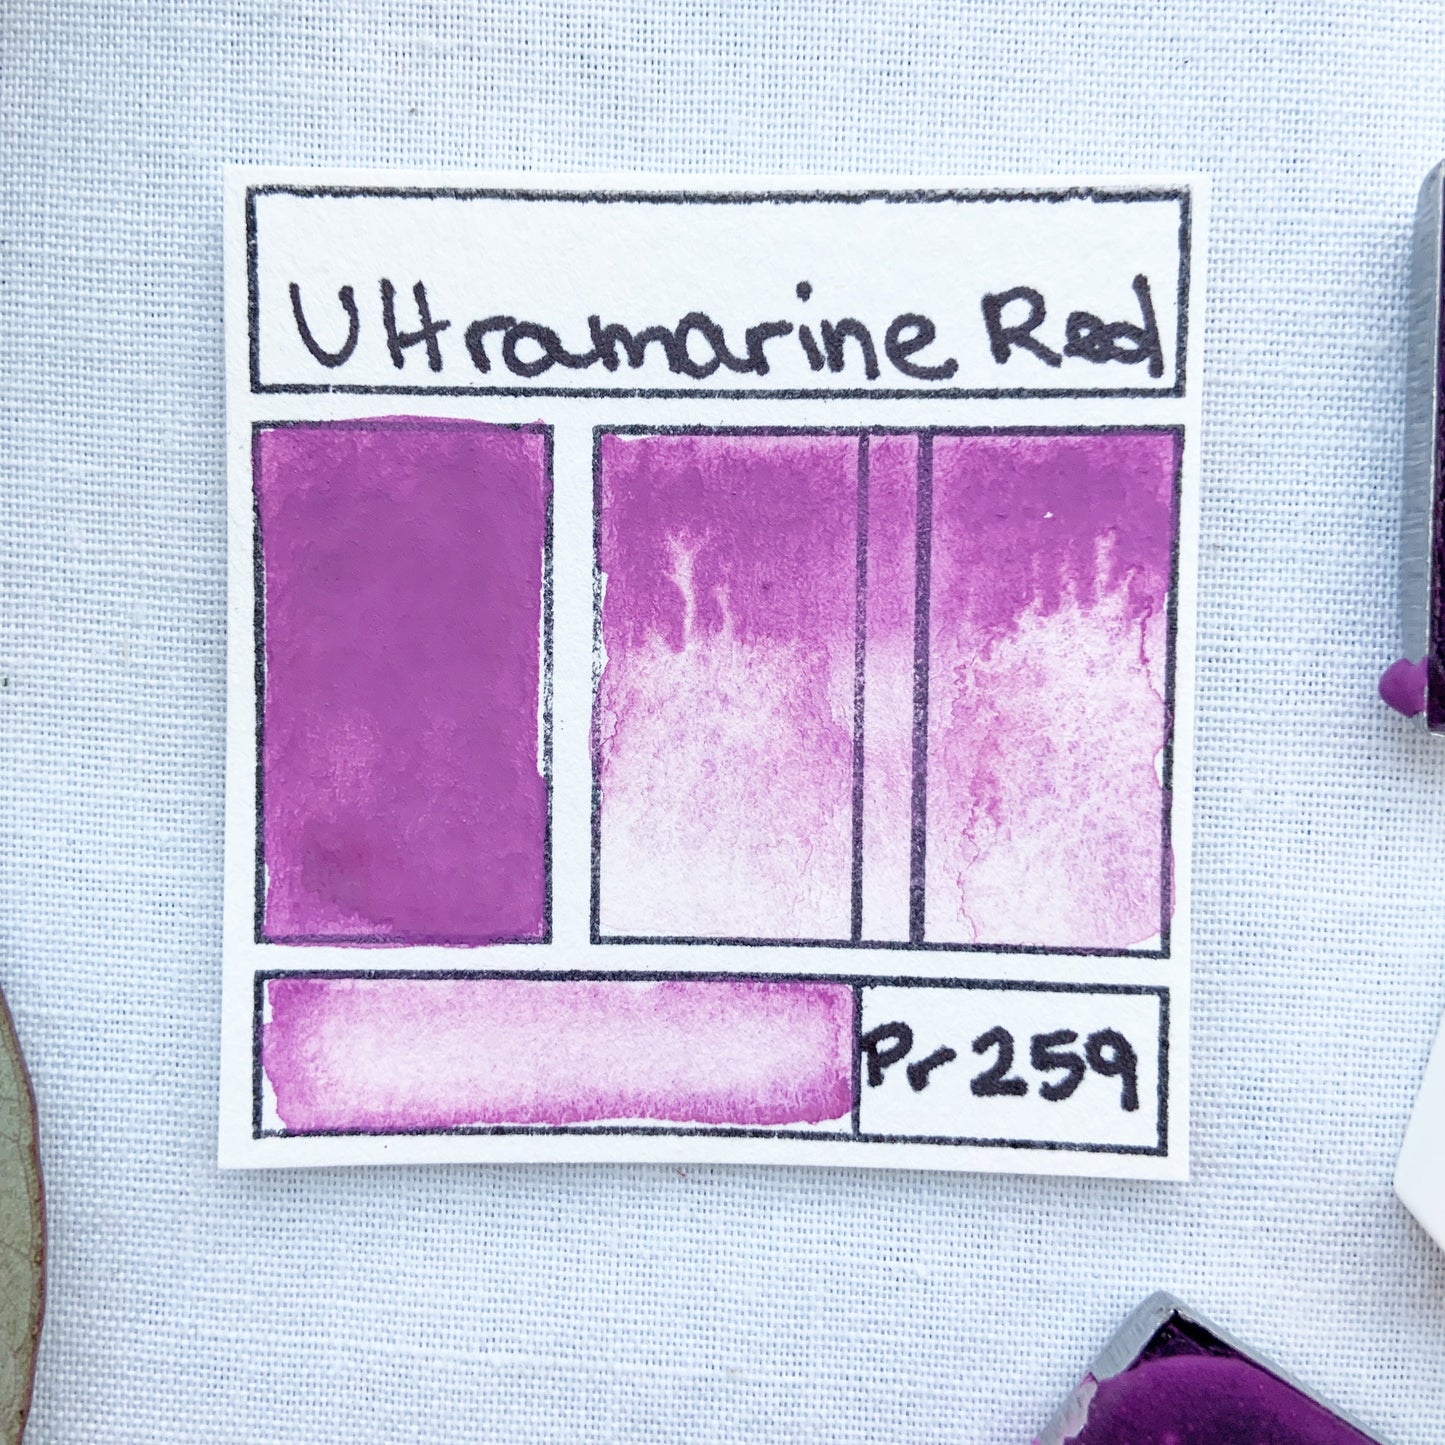 Ultramarine Red. Half pan or bottle cap of handmade ultramarine red watercolor paint